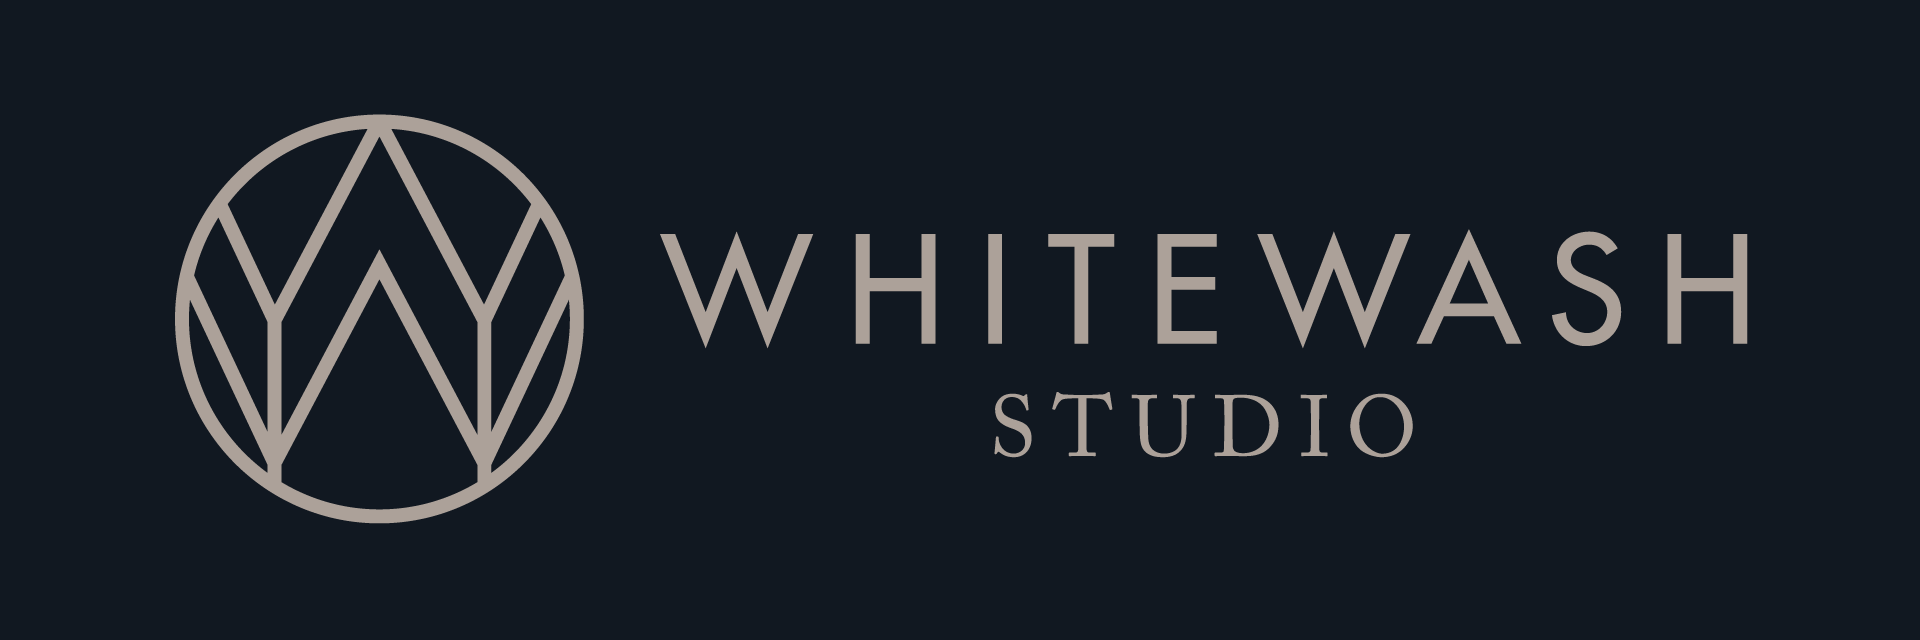 Whitewash Studio Horizontal Logo